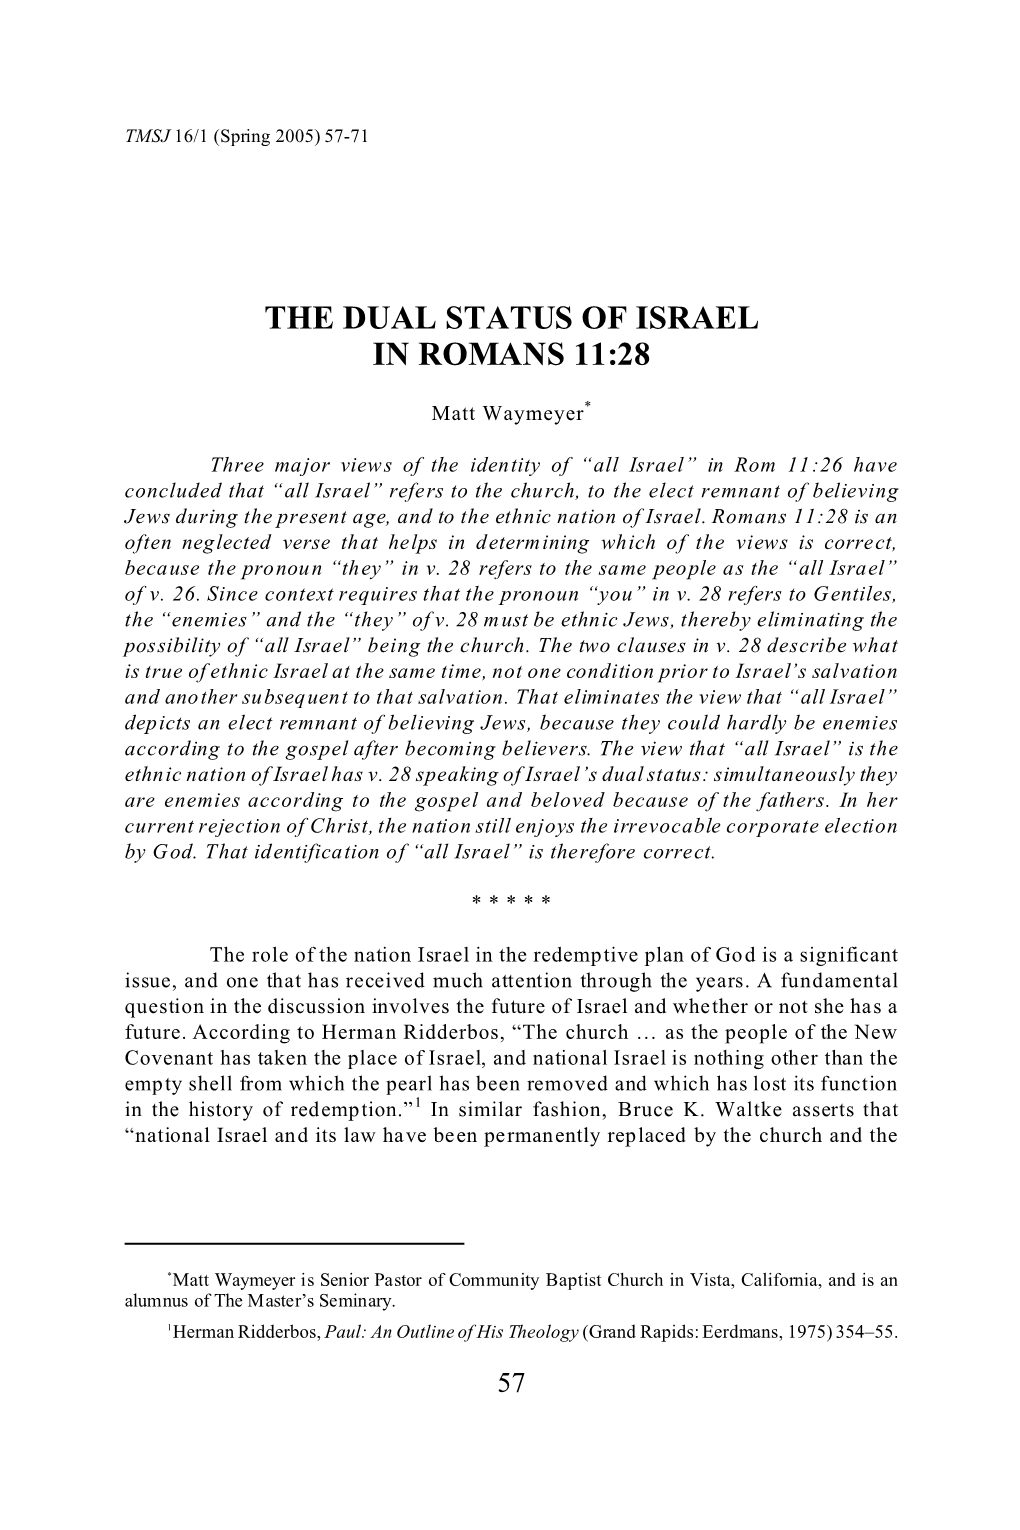 The Dual Status of Israel in Romans 11:28